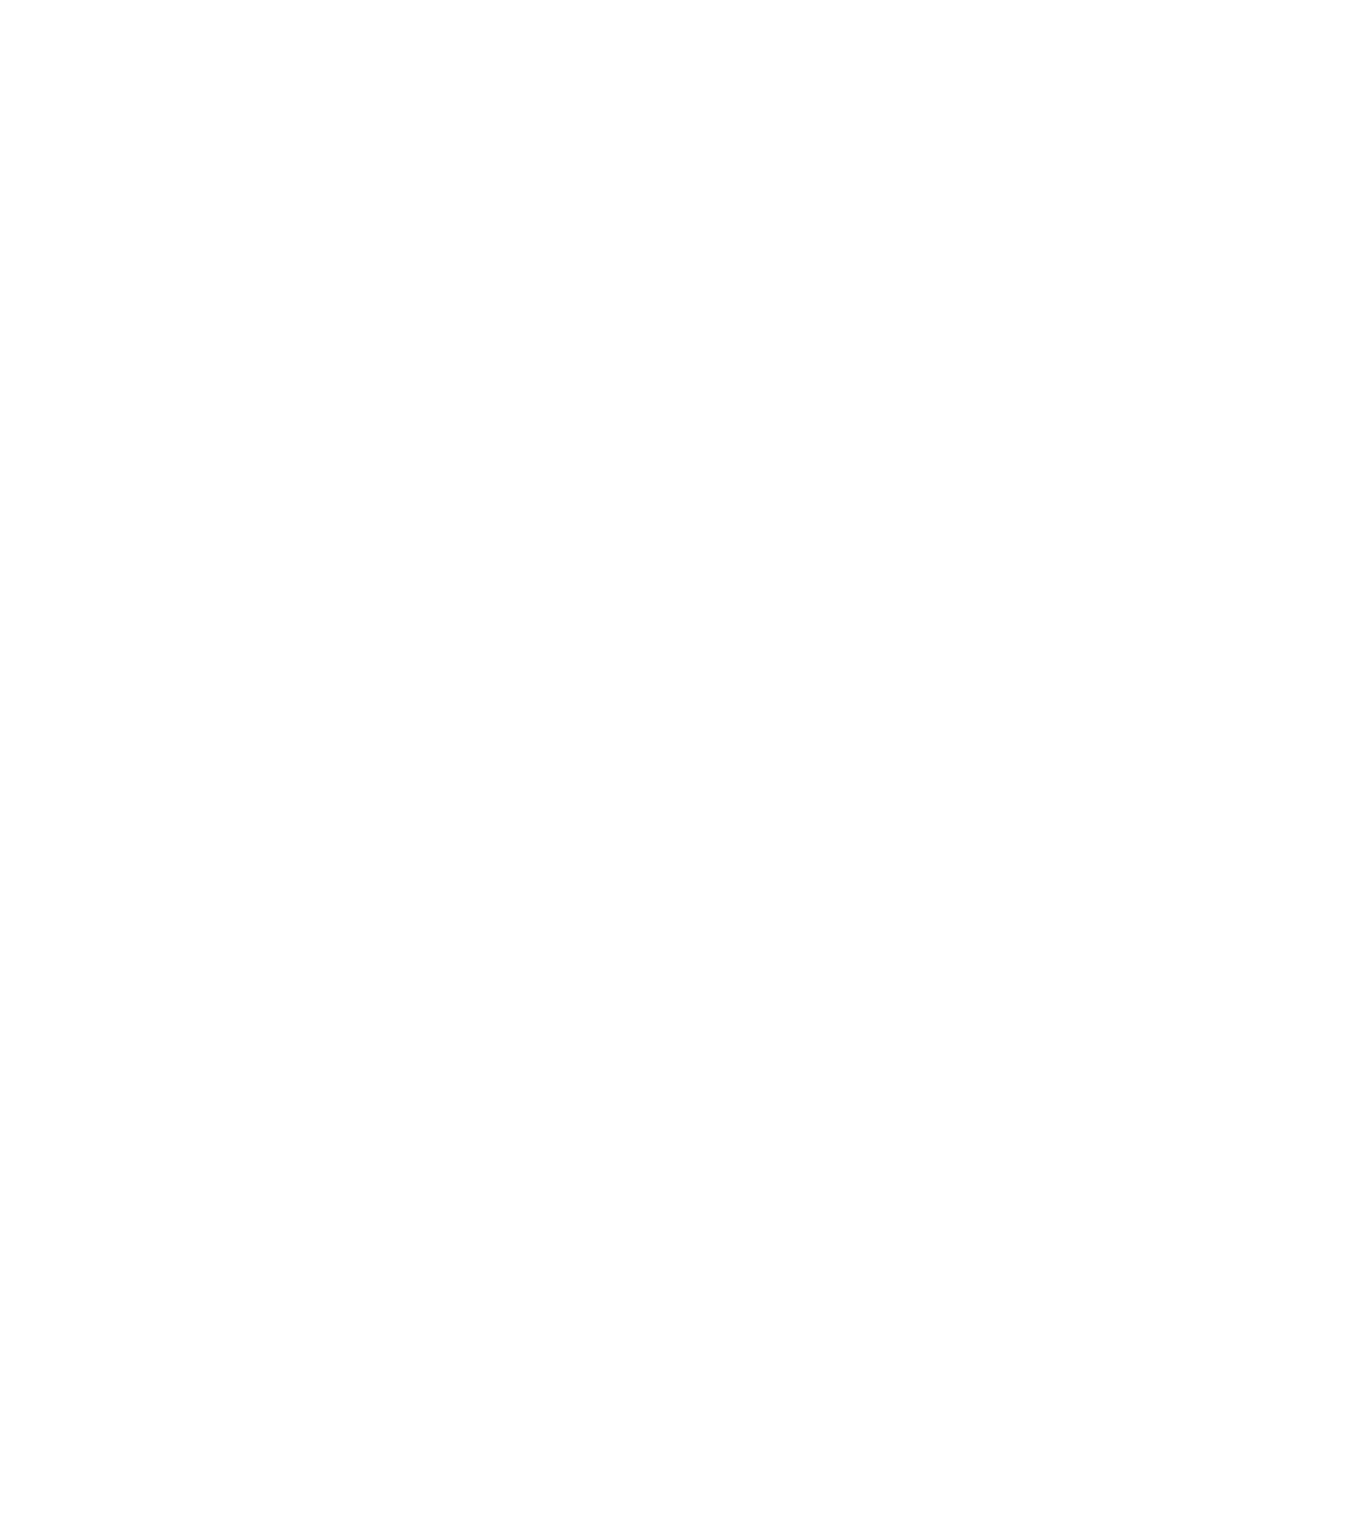 Cresco Labs logo for dark backgrounds (transparent PNG)